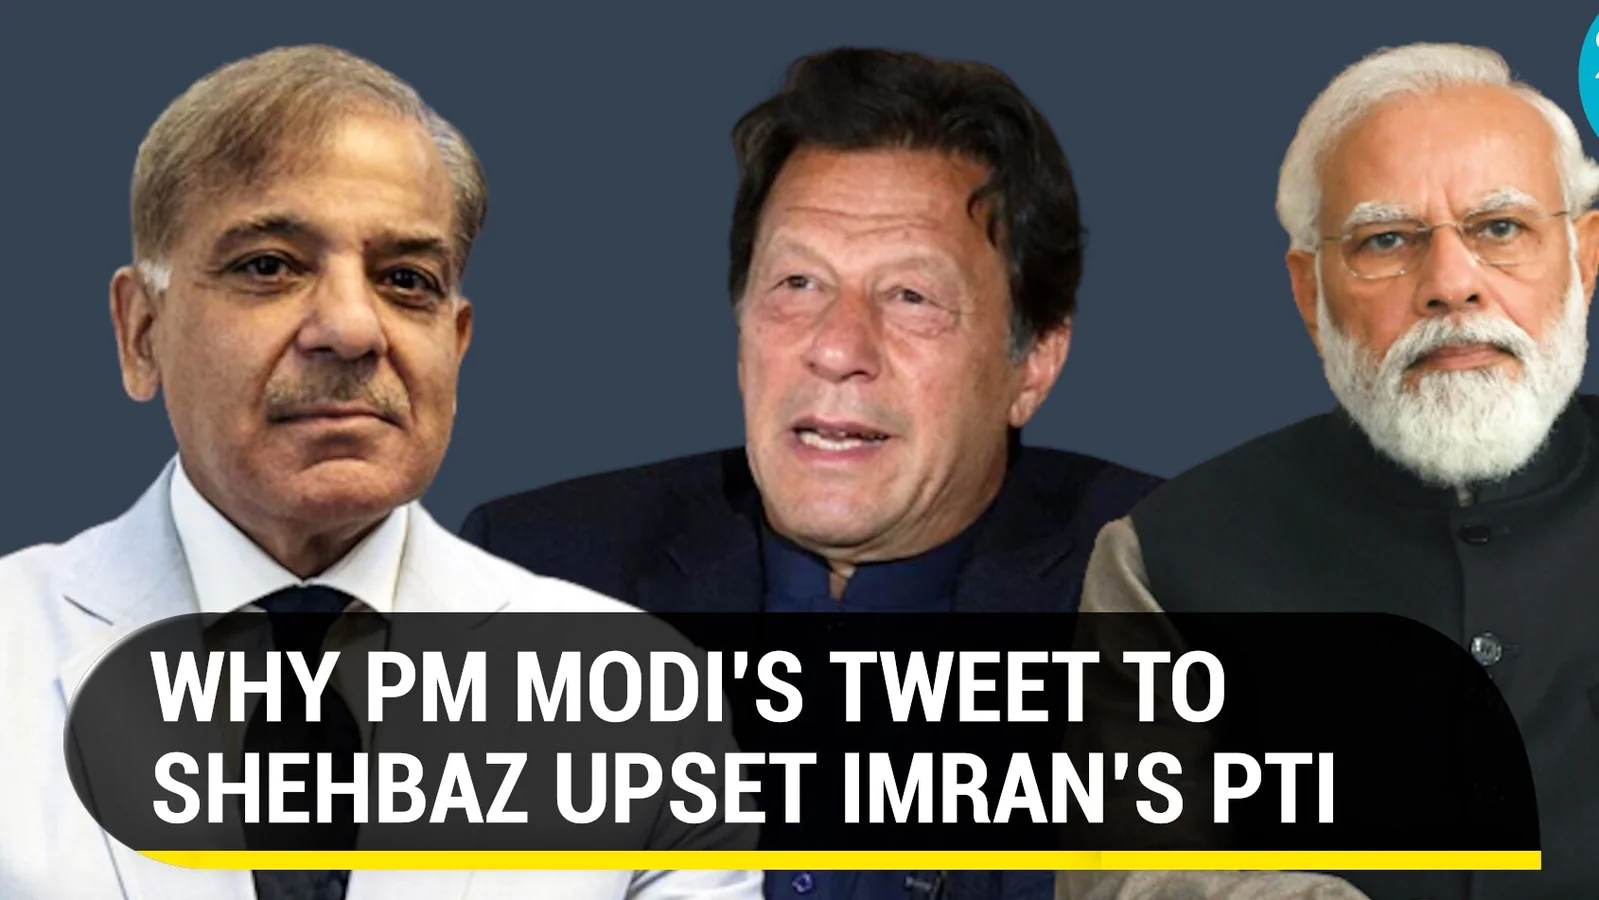 Meltdown in Imran Khan’s PTI over PM Modi’s tweet to Shehbaz Sharif. Here’s why.